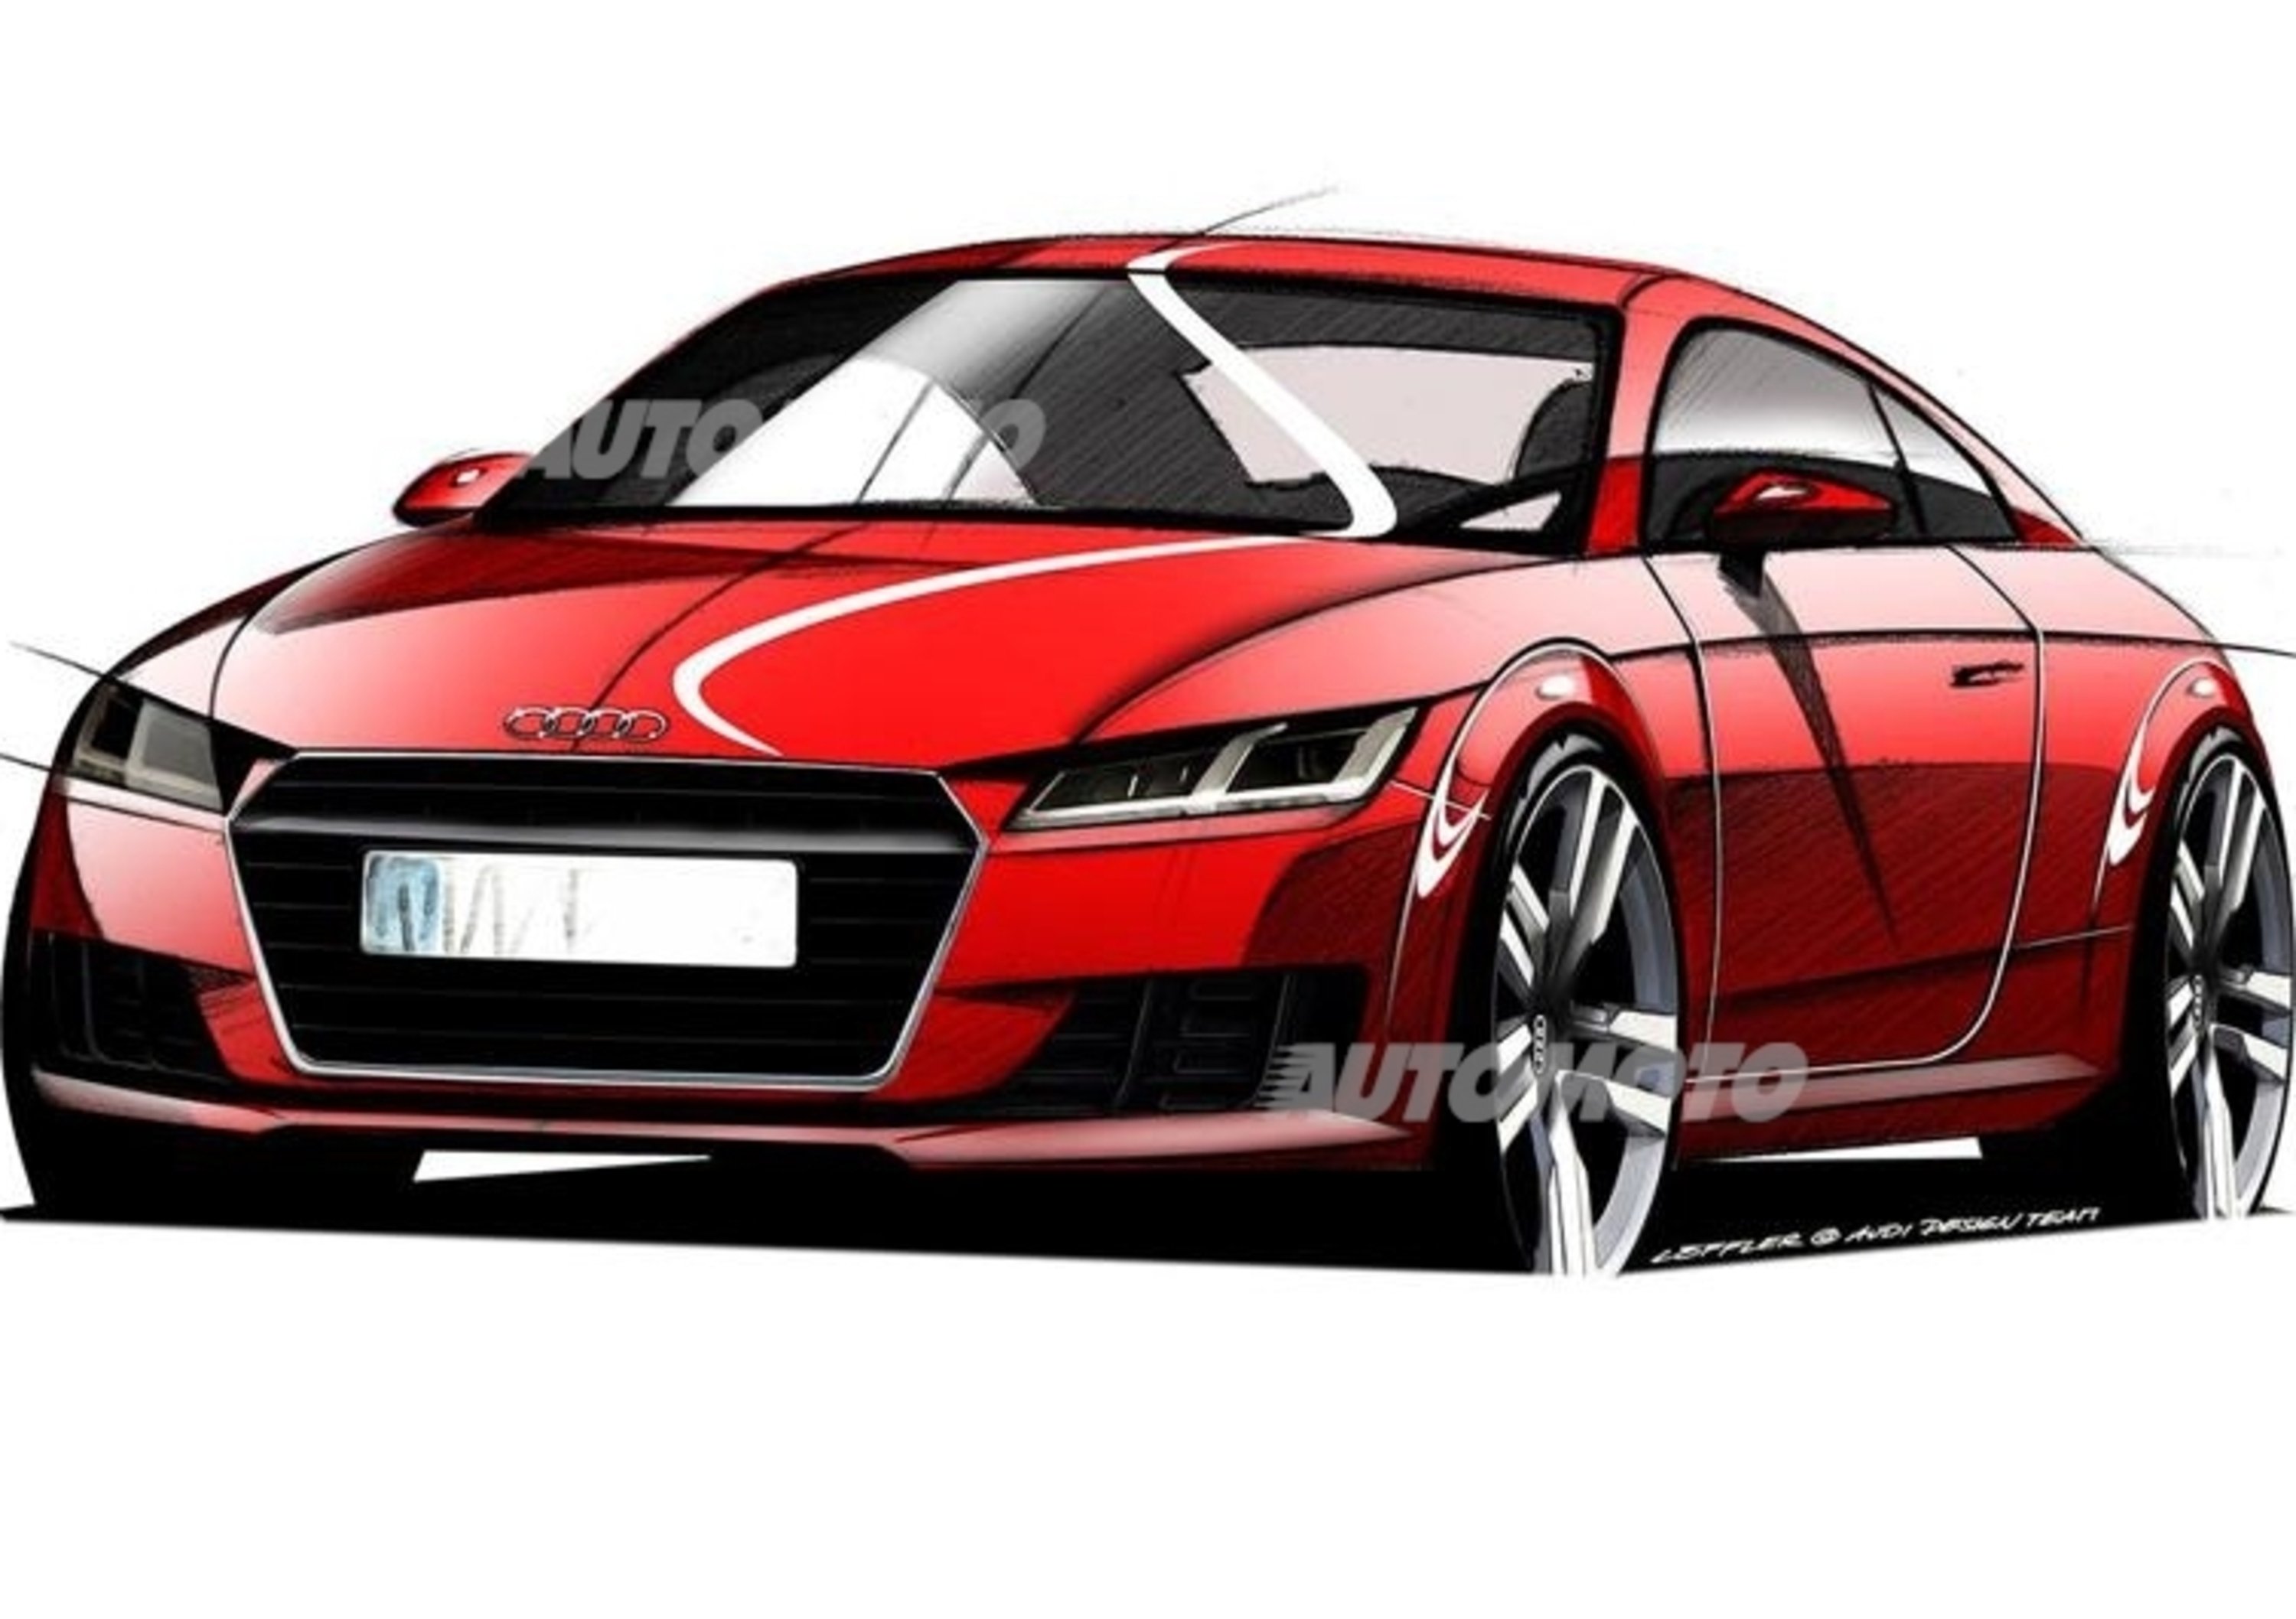 Nuova Audi TT: i primi disegni ufficiali